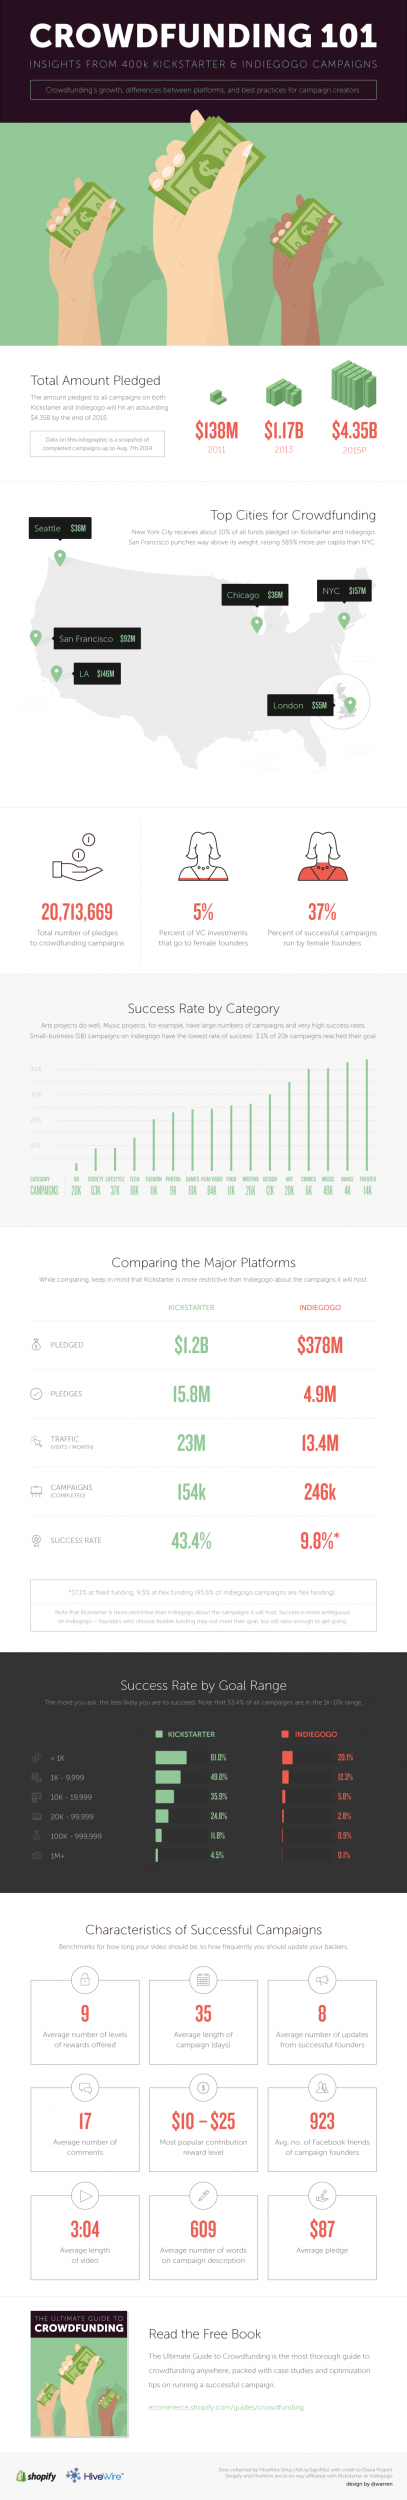 Crowdfunding social 2 - kickstarter vs Indiegogo - Social With It - Social Media Blog